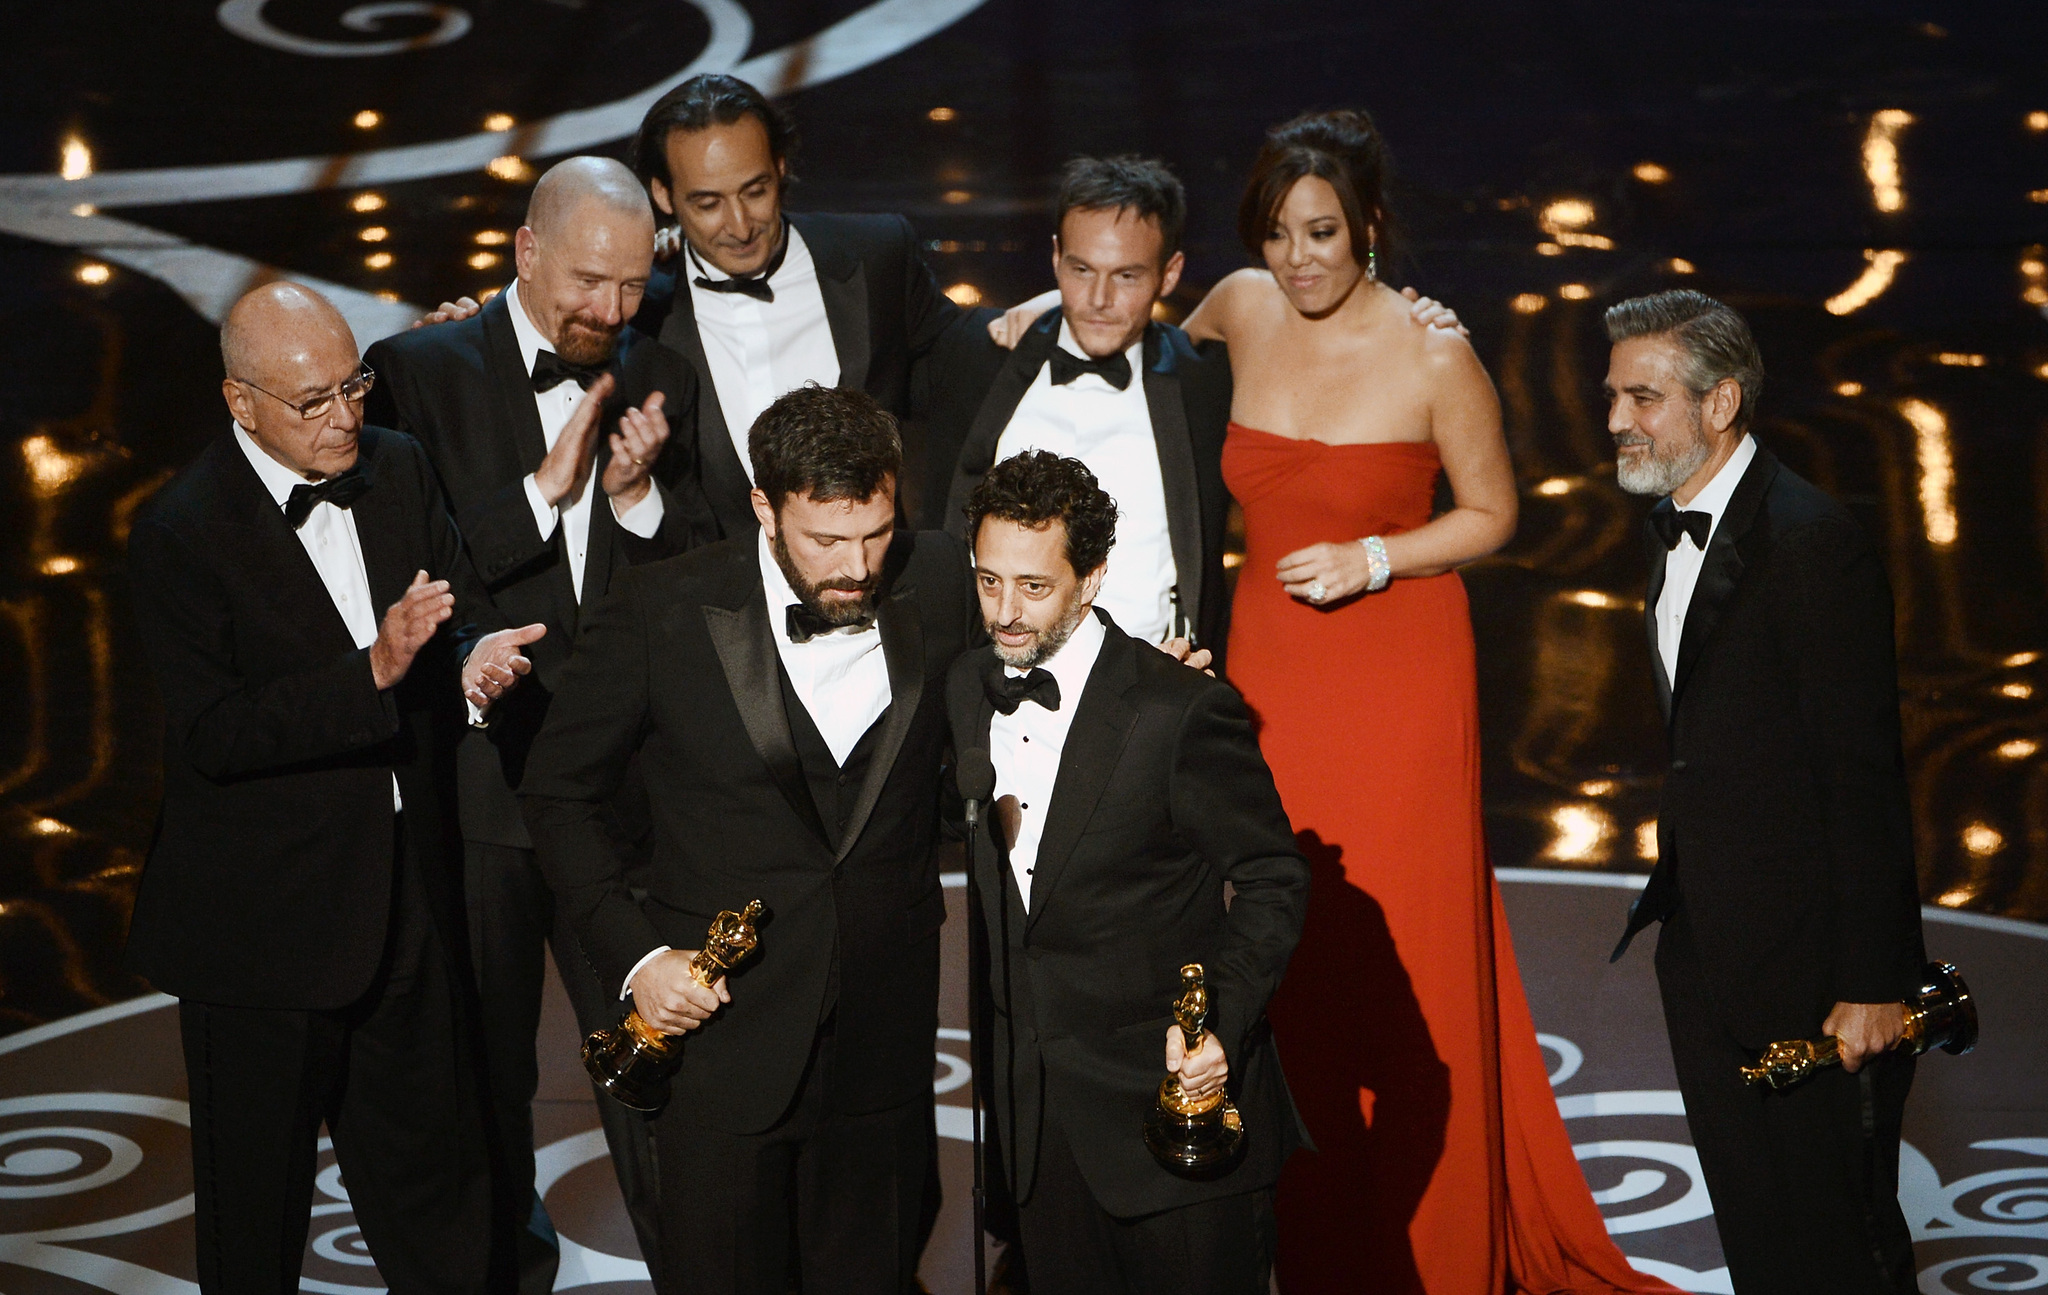 George Clooney, Ben Affleck, Alan Arkin, Bryan Cranston and Grant Heslov at event of The Oscars (2013)